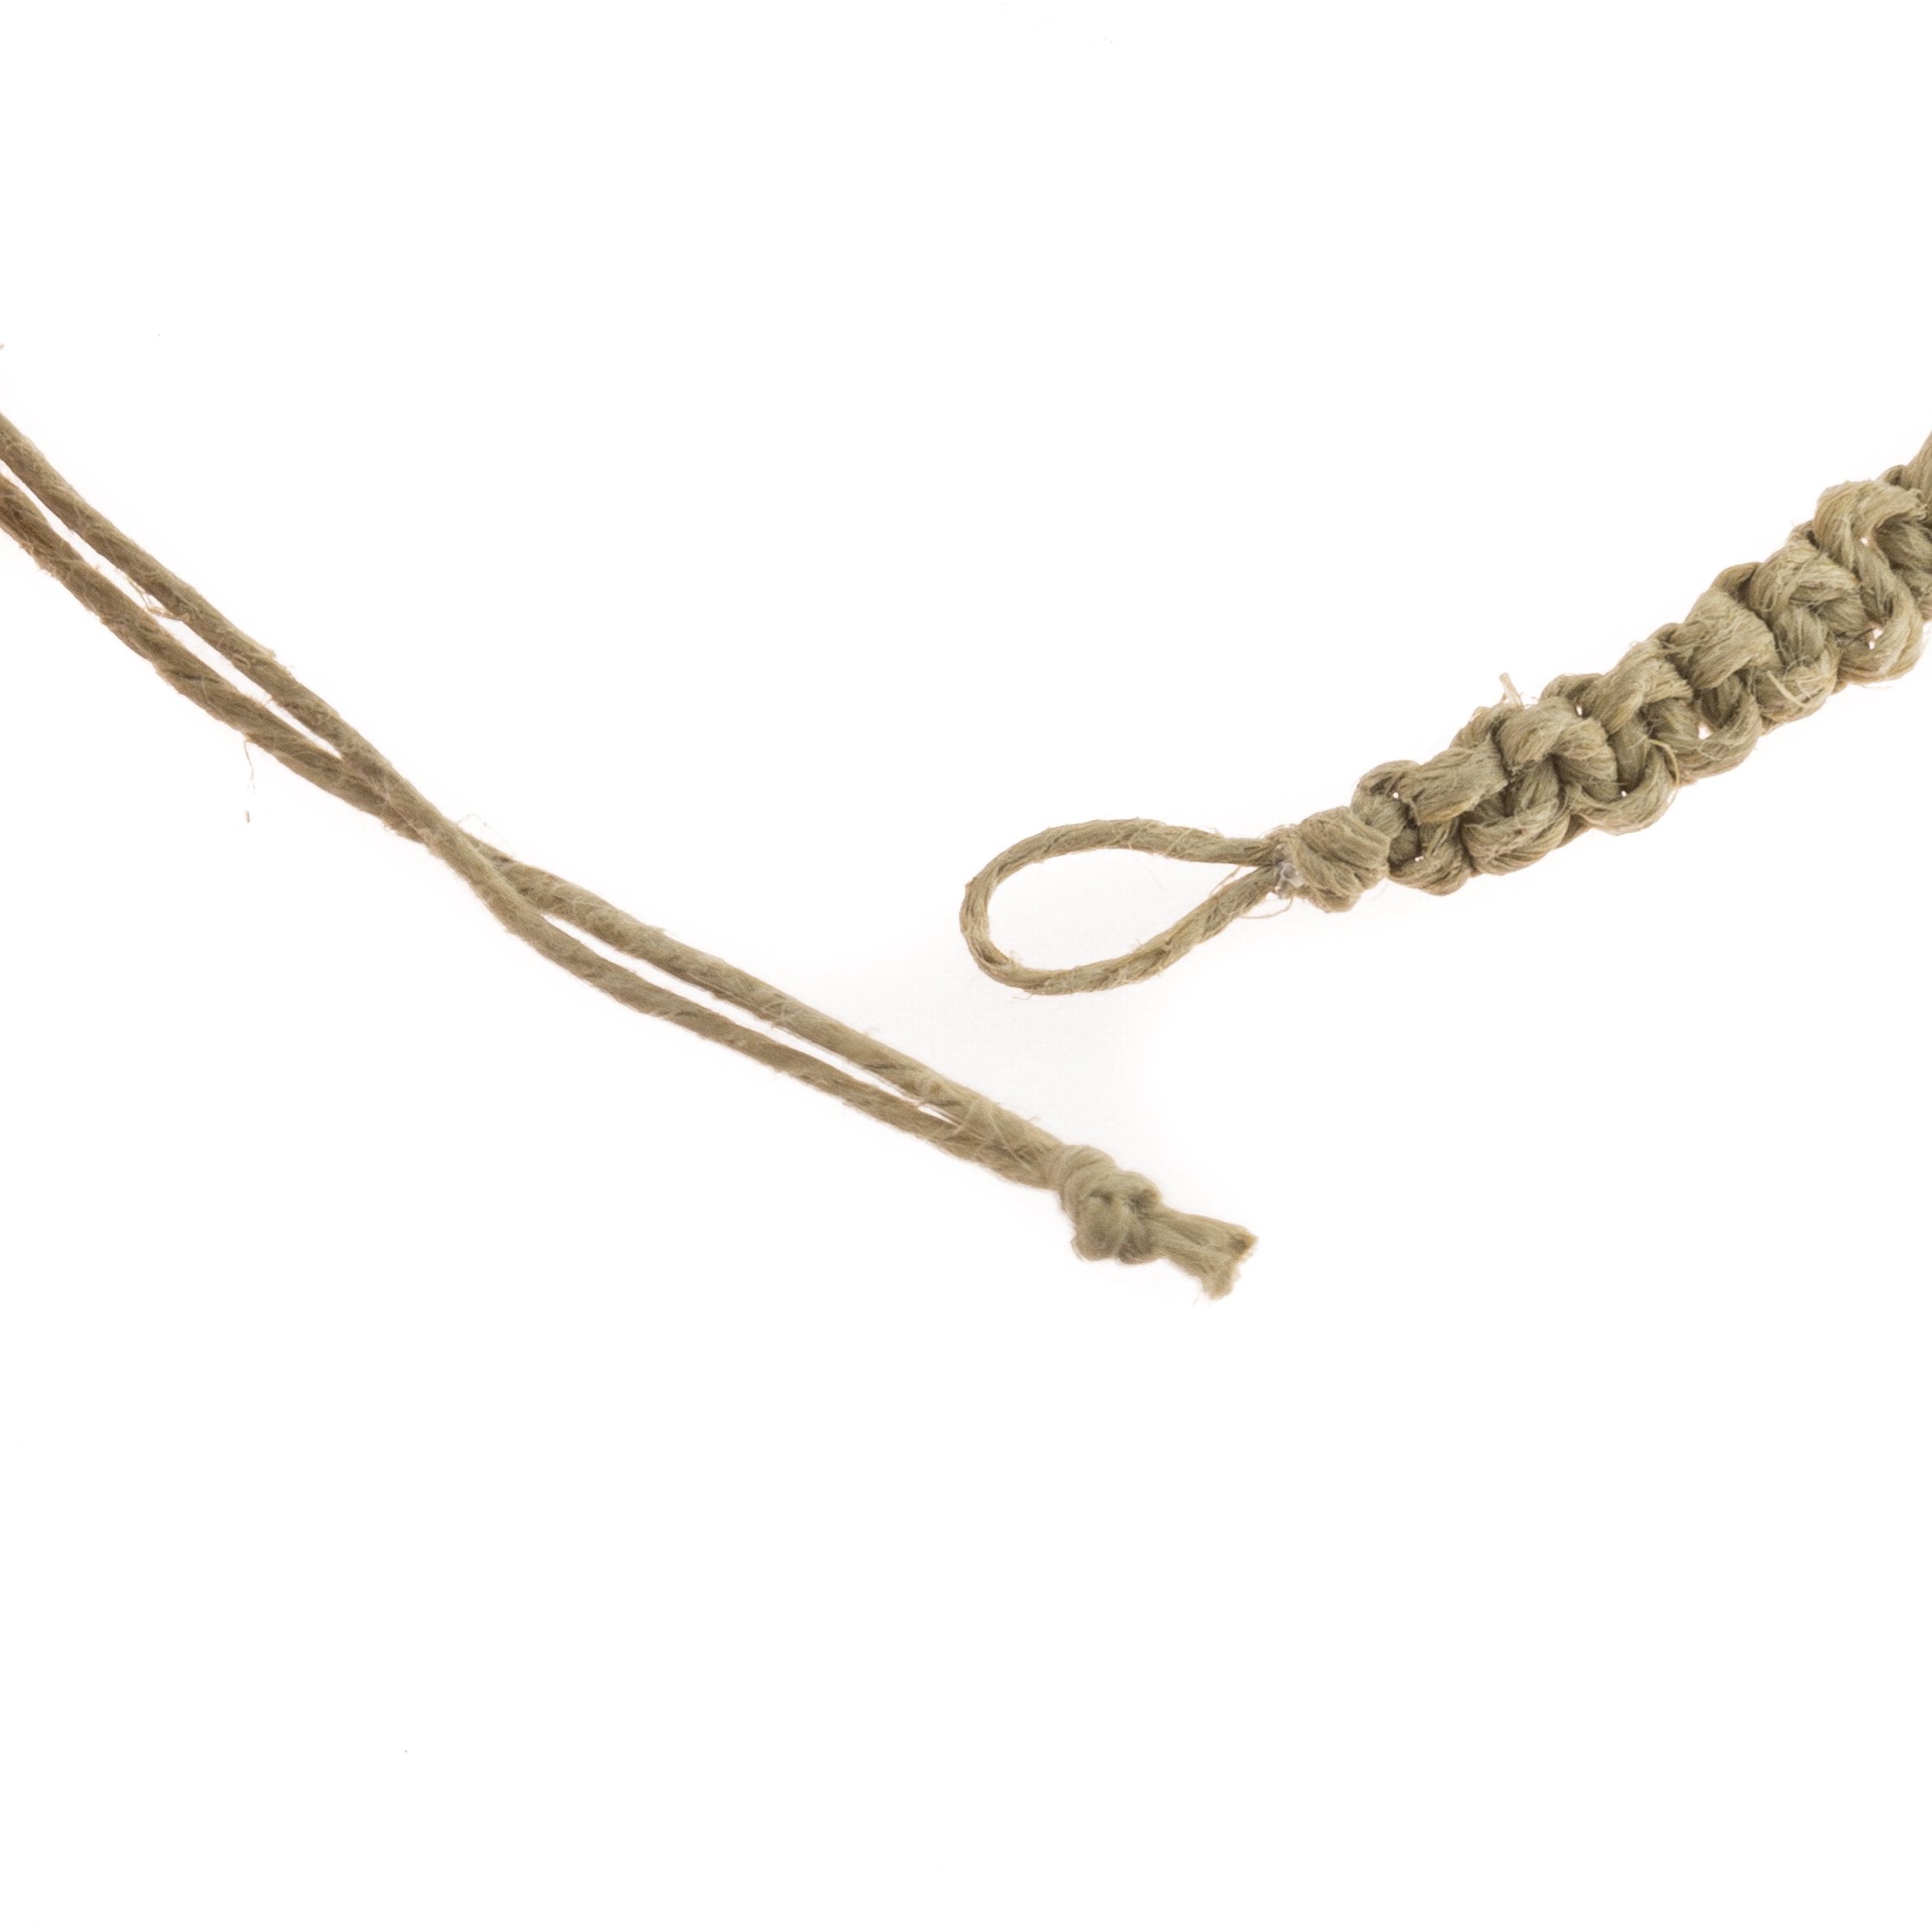 Puka Shell Beads on Hemp Anklet Bracelet